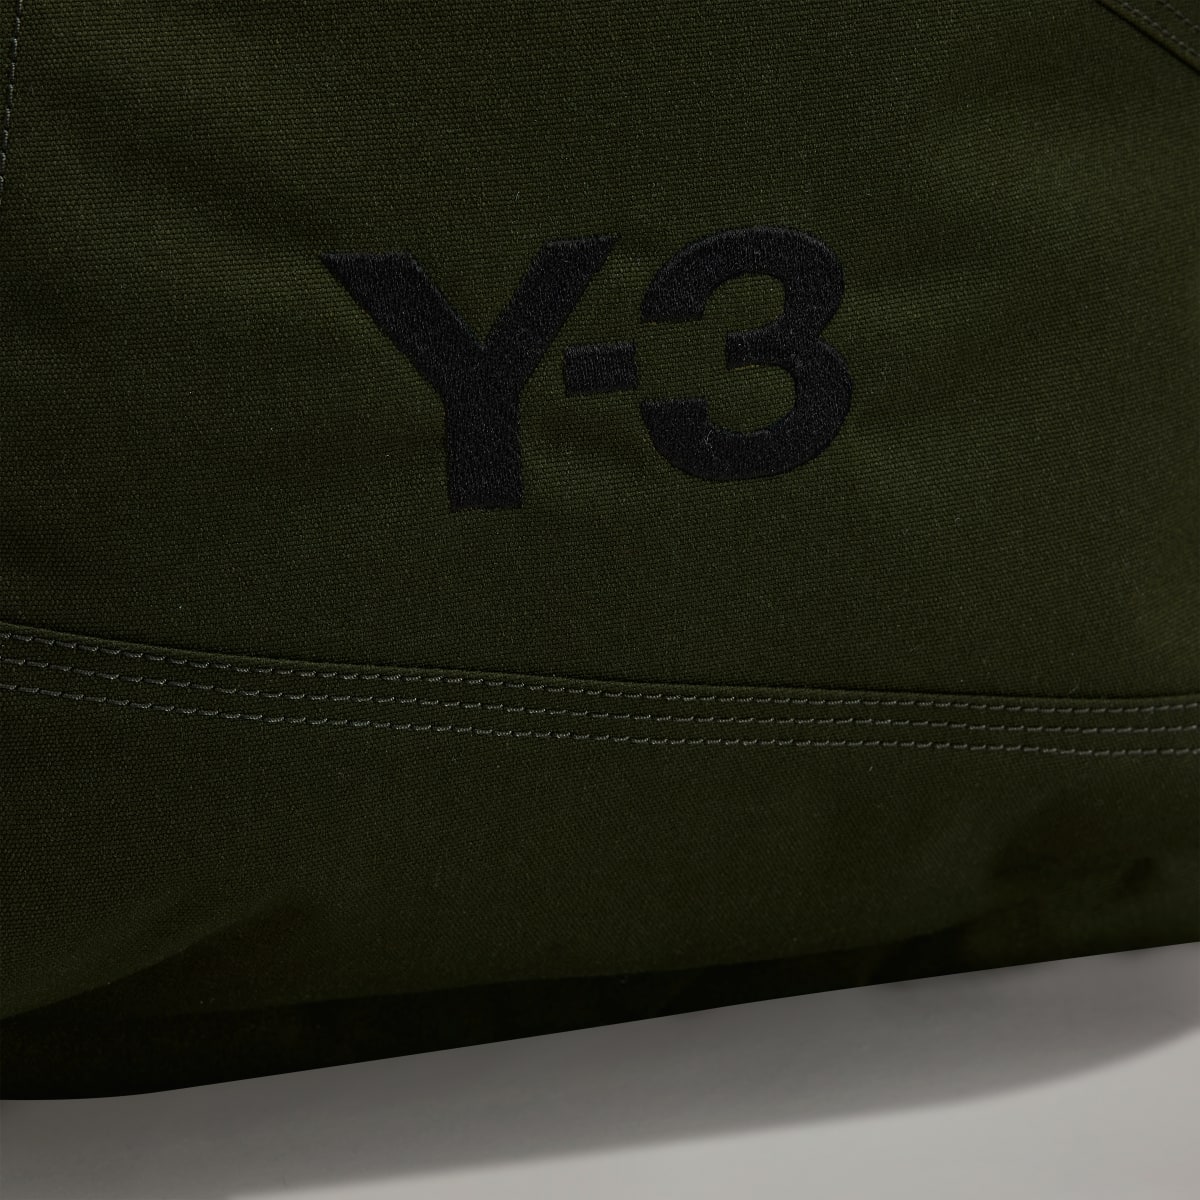 Adidas Tote bag Y-3 Classic. 7